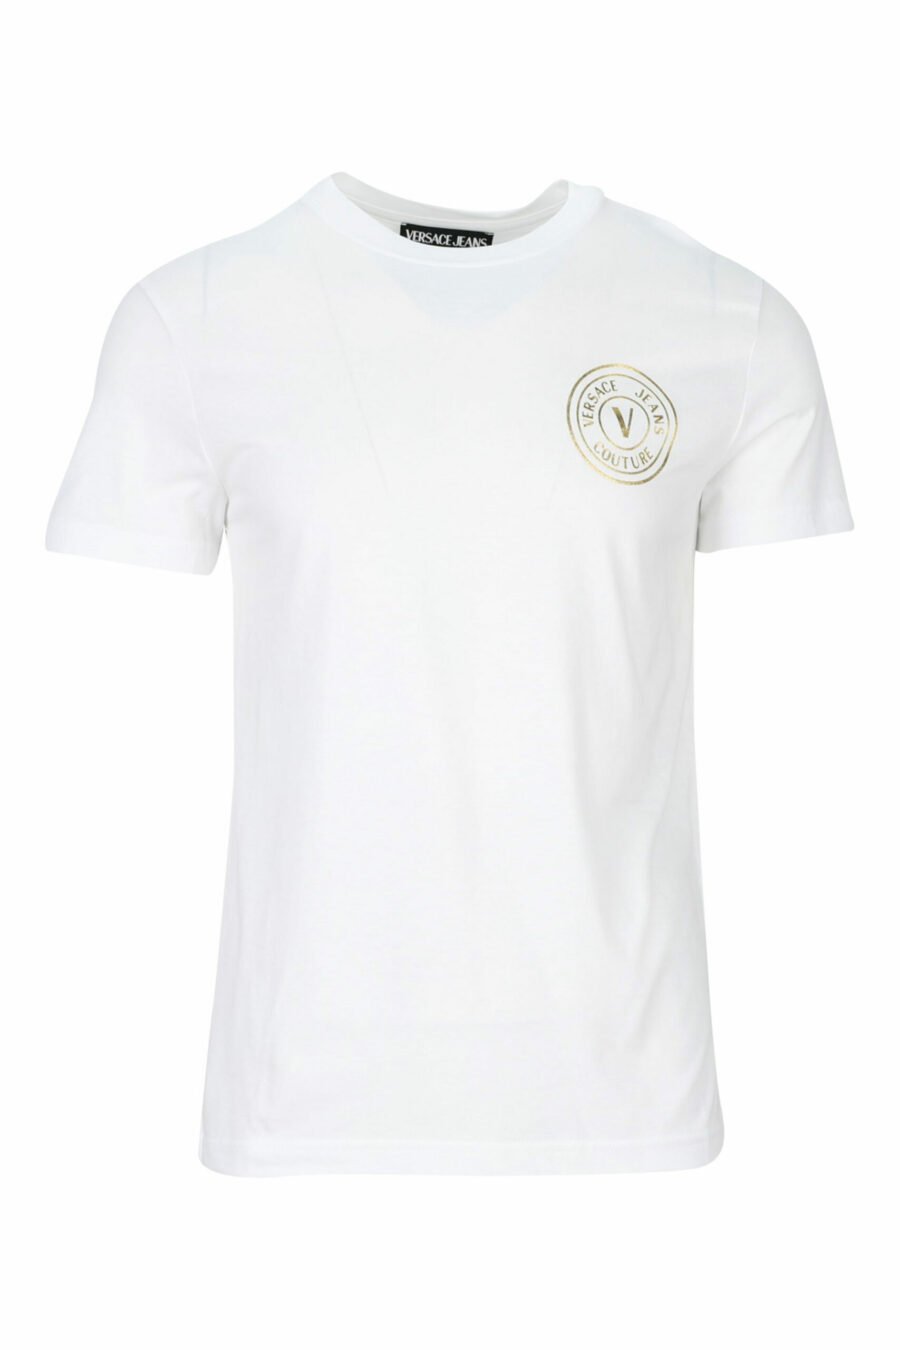 T-shirt branca com mini-logotipo circular dourado - 8052019468397 scaled